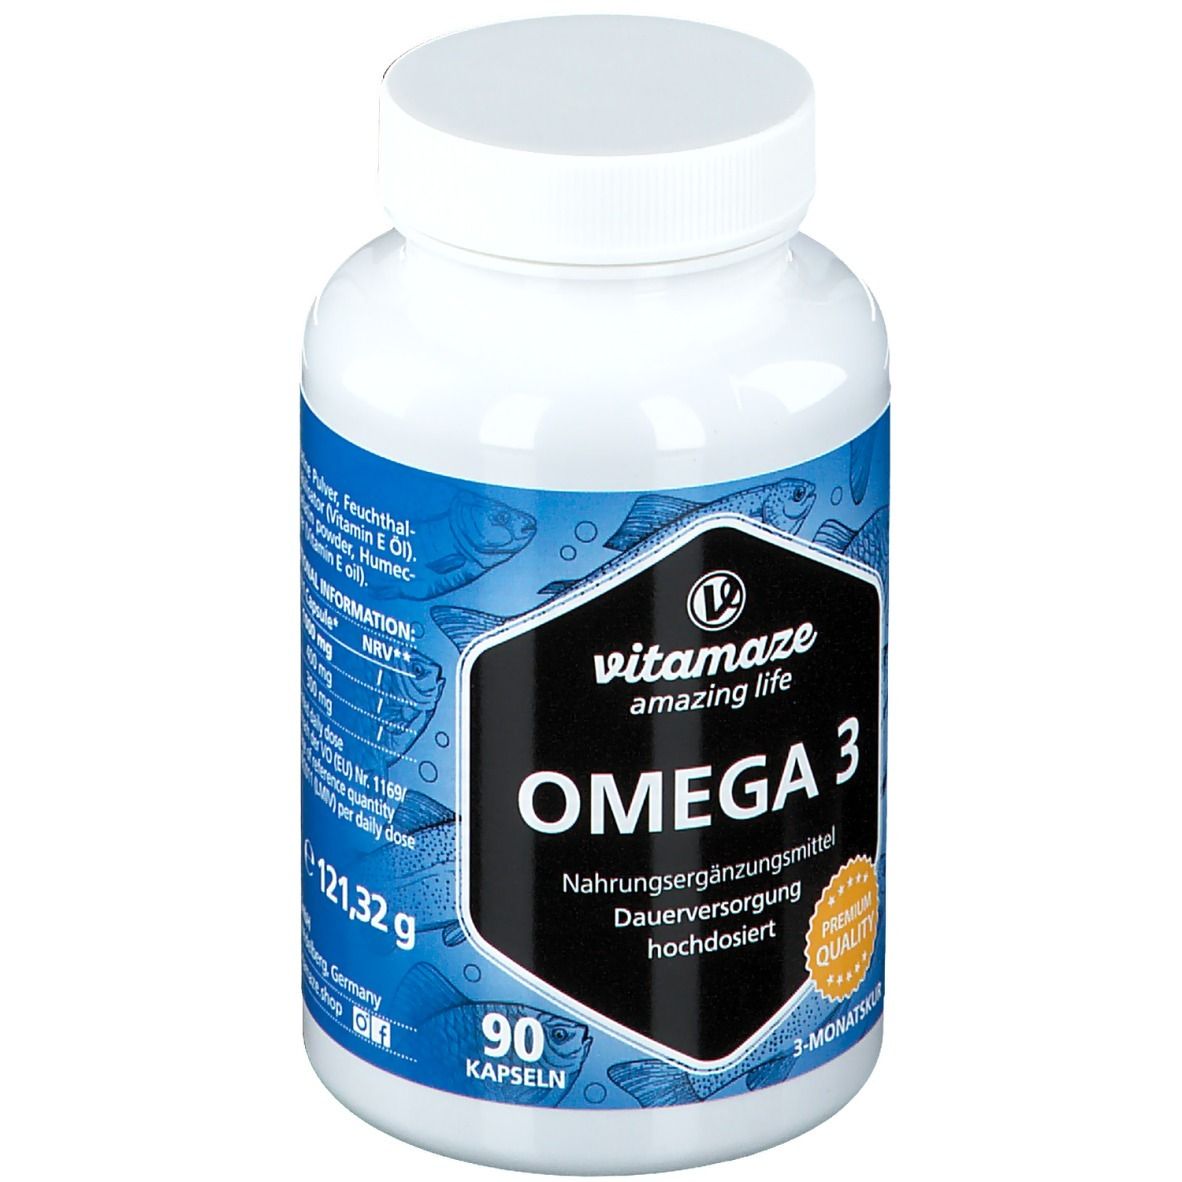 Vitamaze Omega 3 dosage élevé